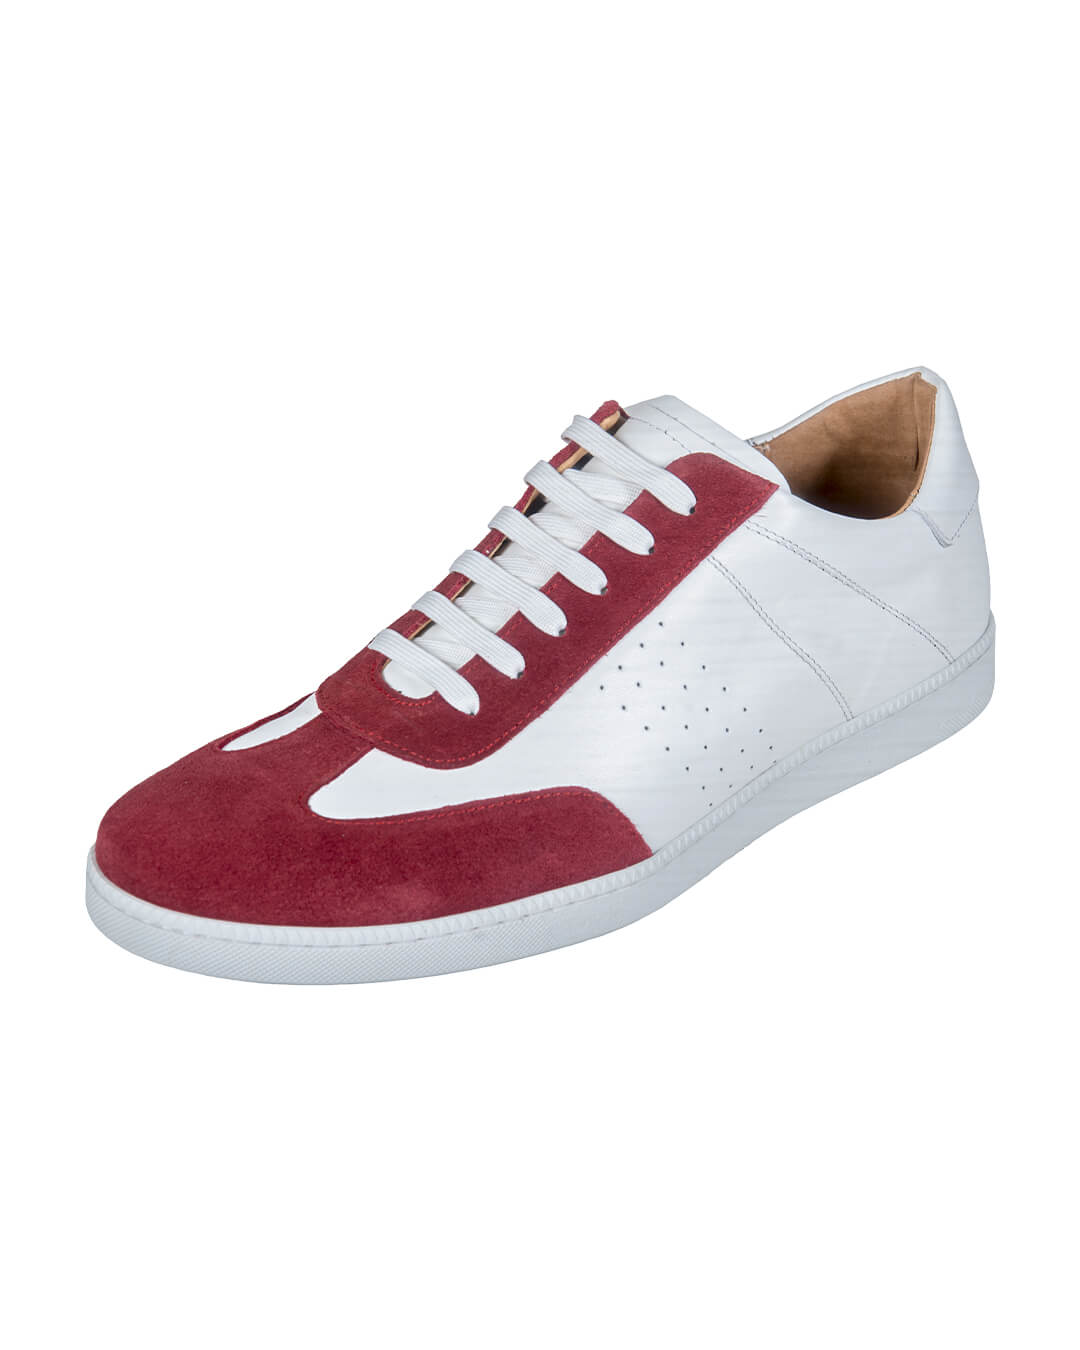 Gagliardi Shoes Gagliardi White Leather & Suede Tennis Trainers